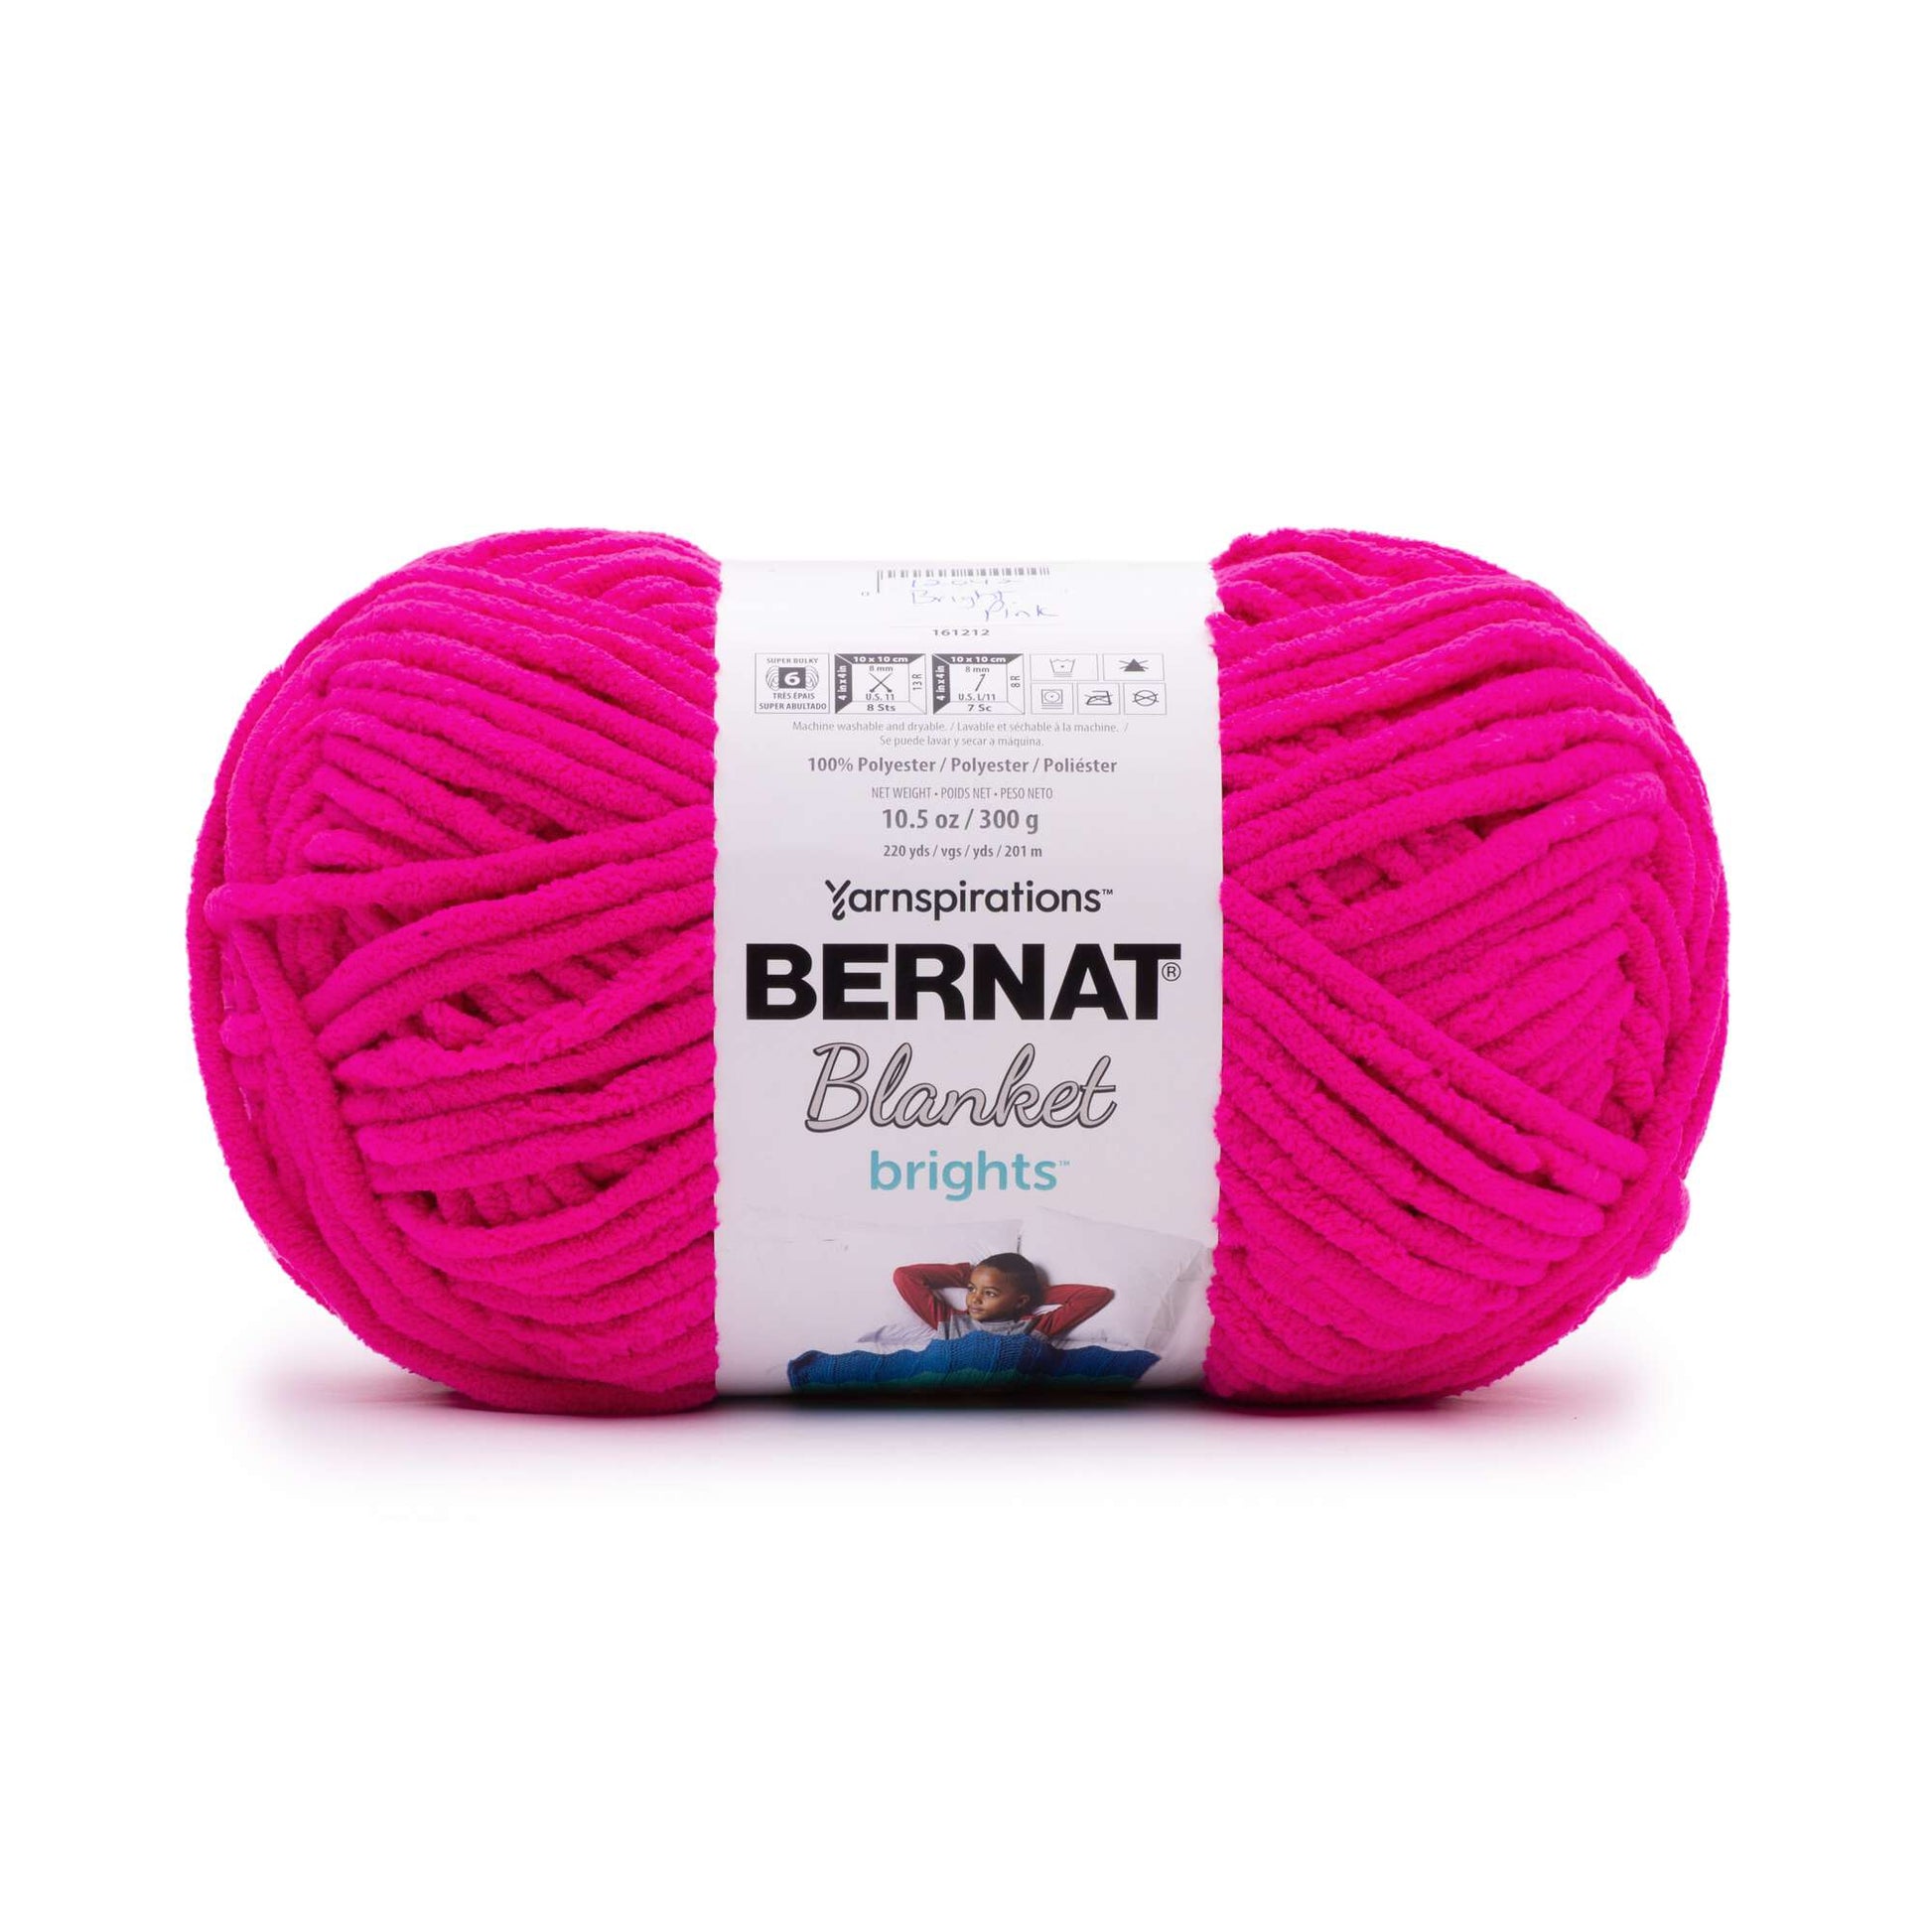 Bernat Blanket Brights Yarn-Pow Purple, 1 count - Smith's Food and